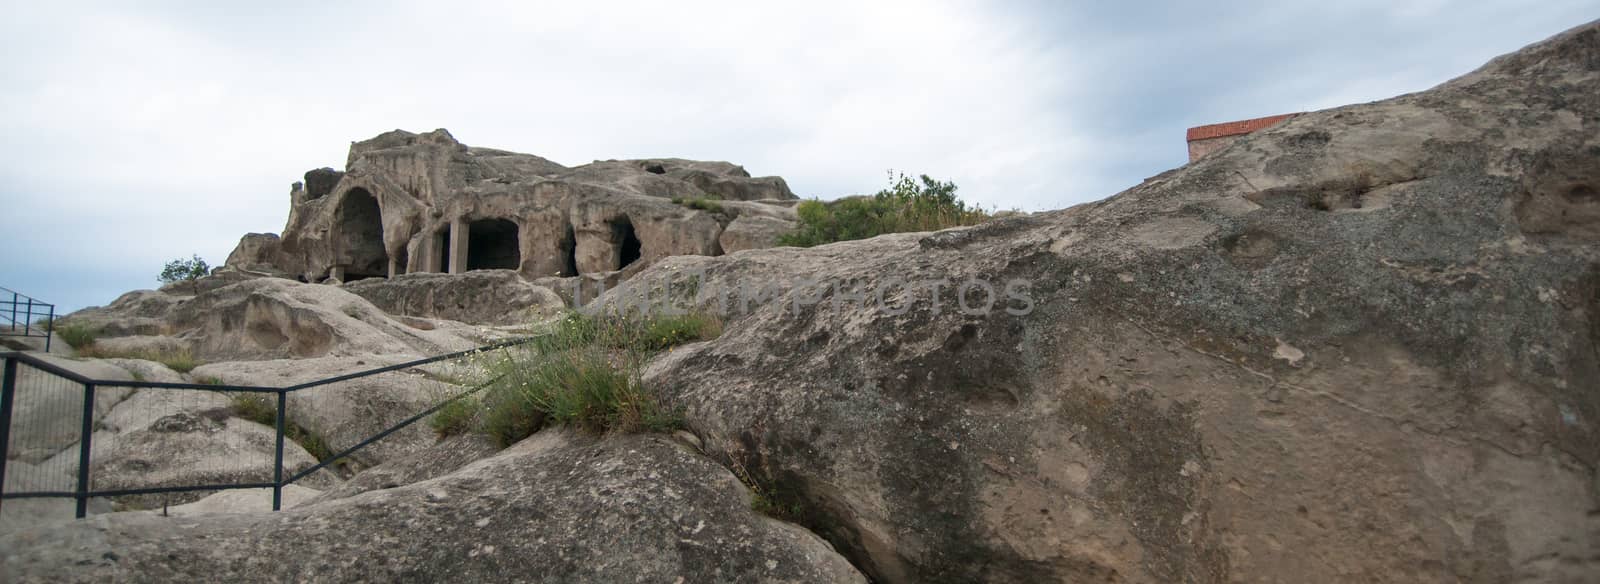 Uplistsikhe ancient rock-hewn town by javax